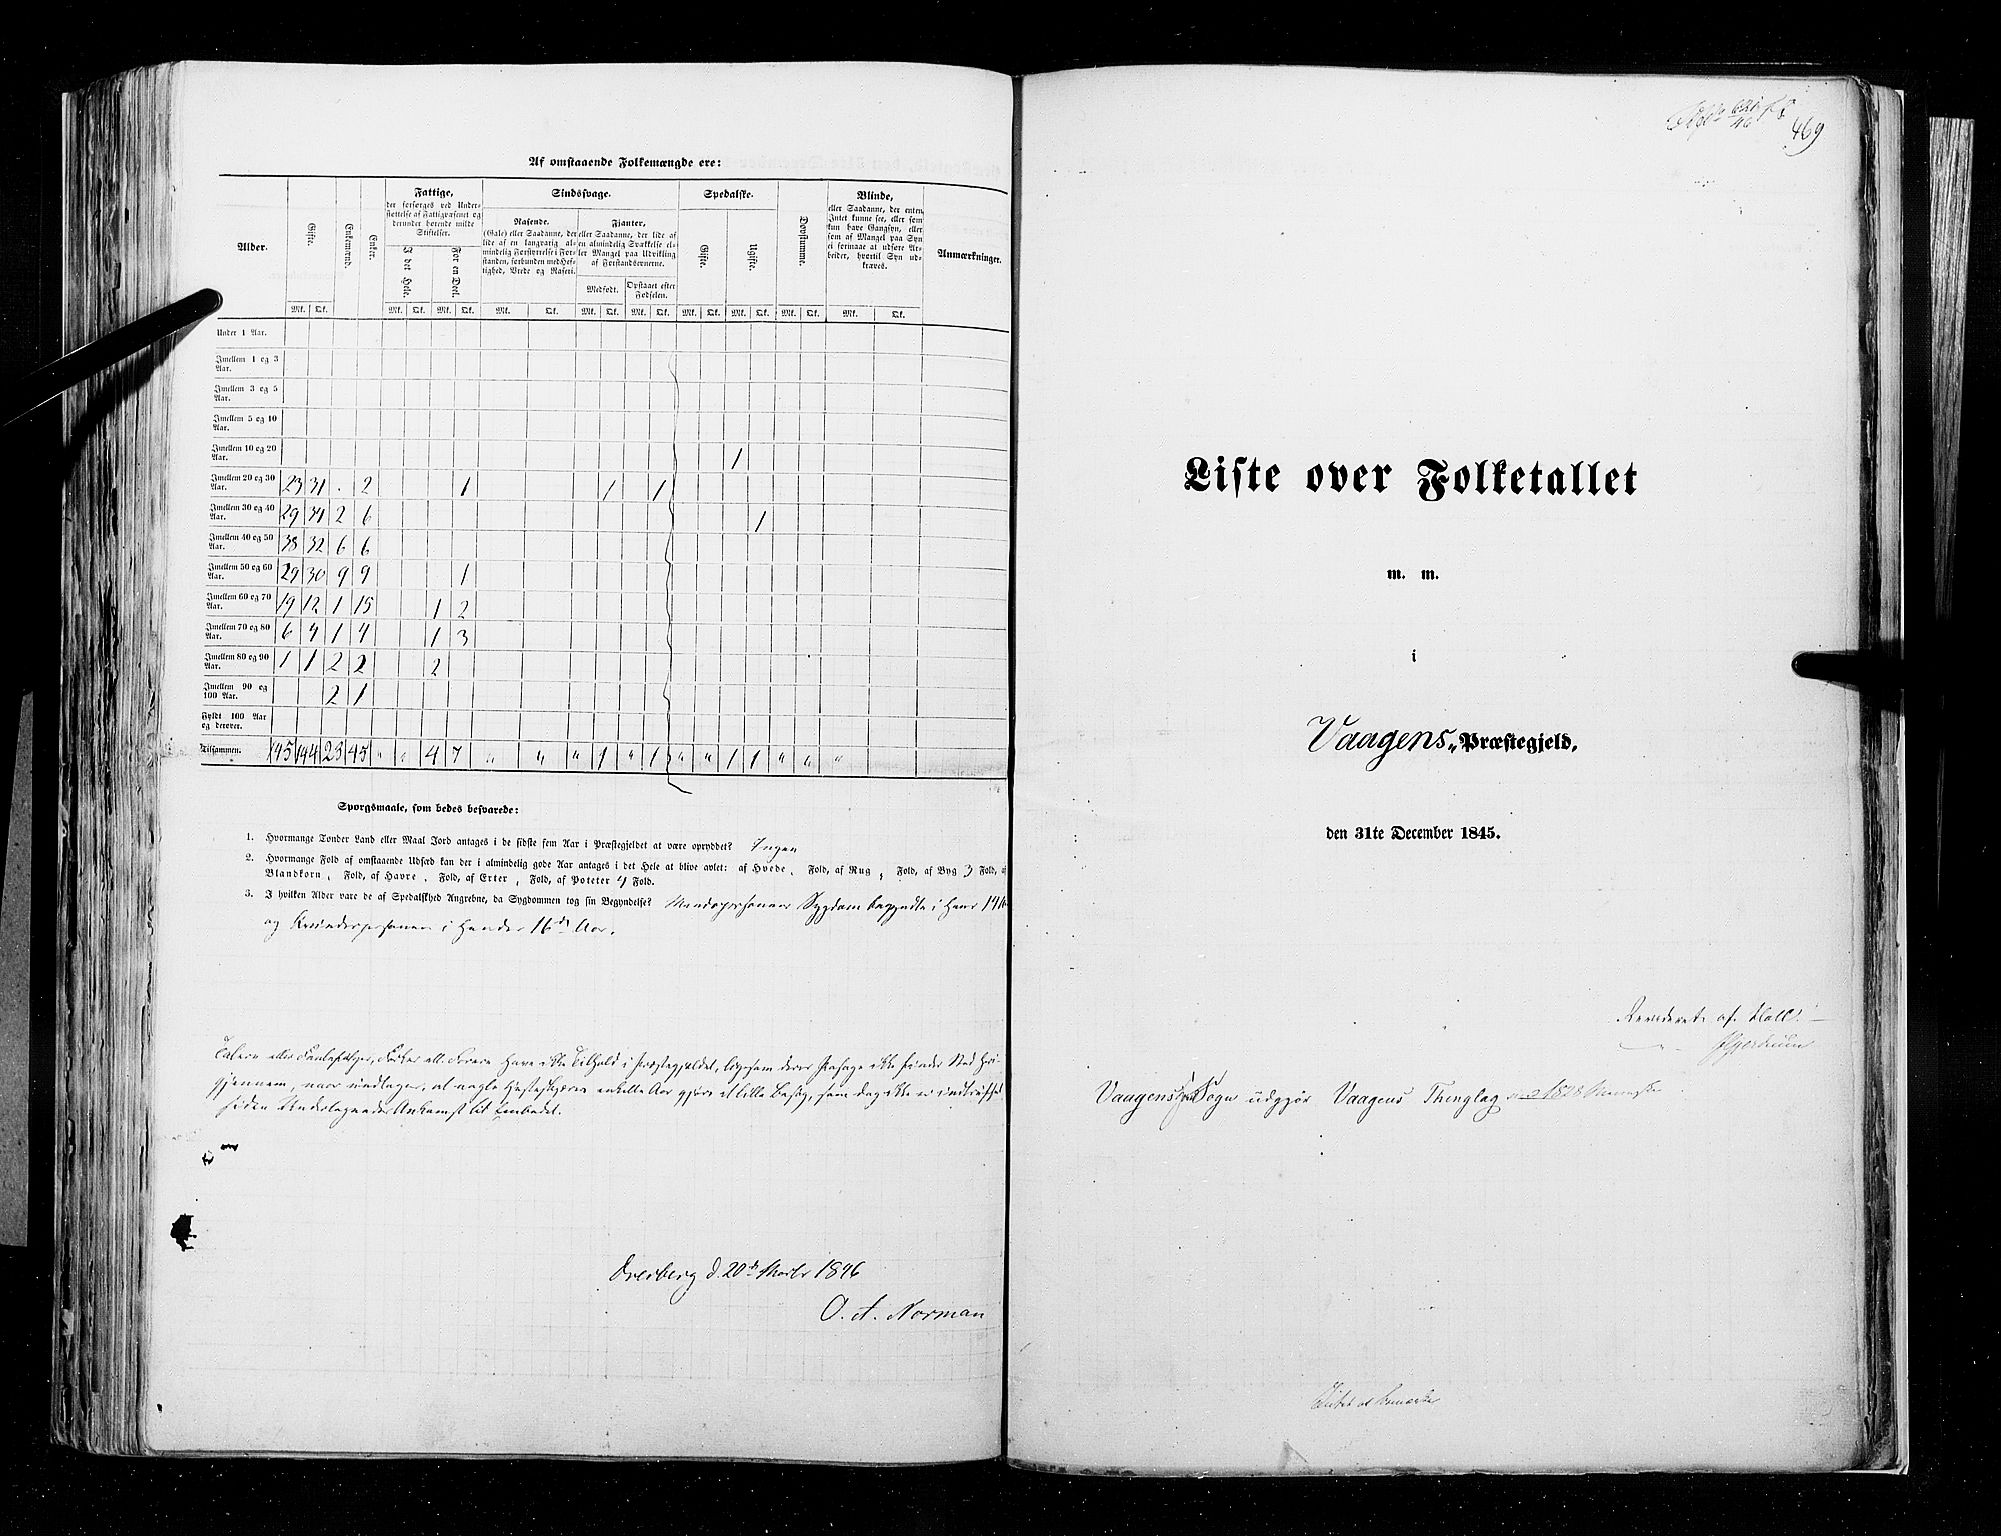 RA, Folketellingen 1845, bind 9B: Nordland amt, 1845, s. 469